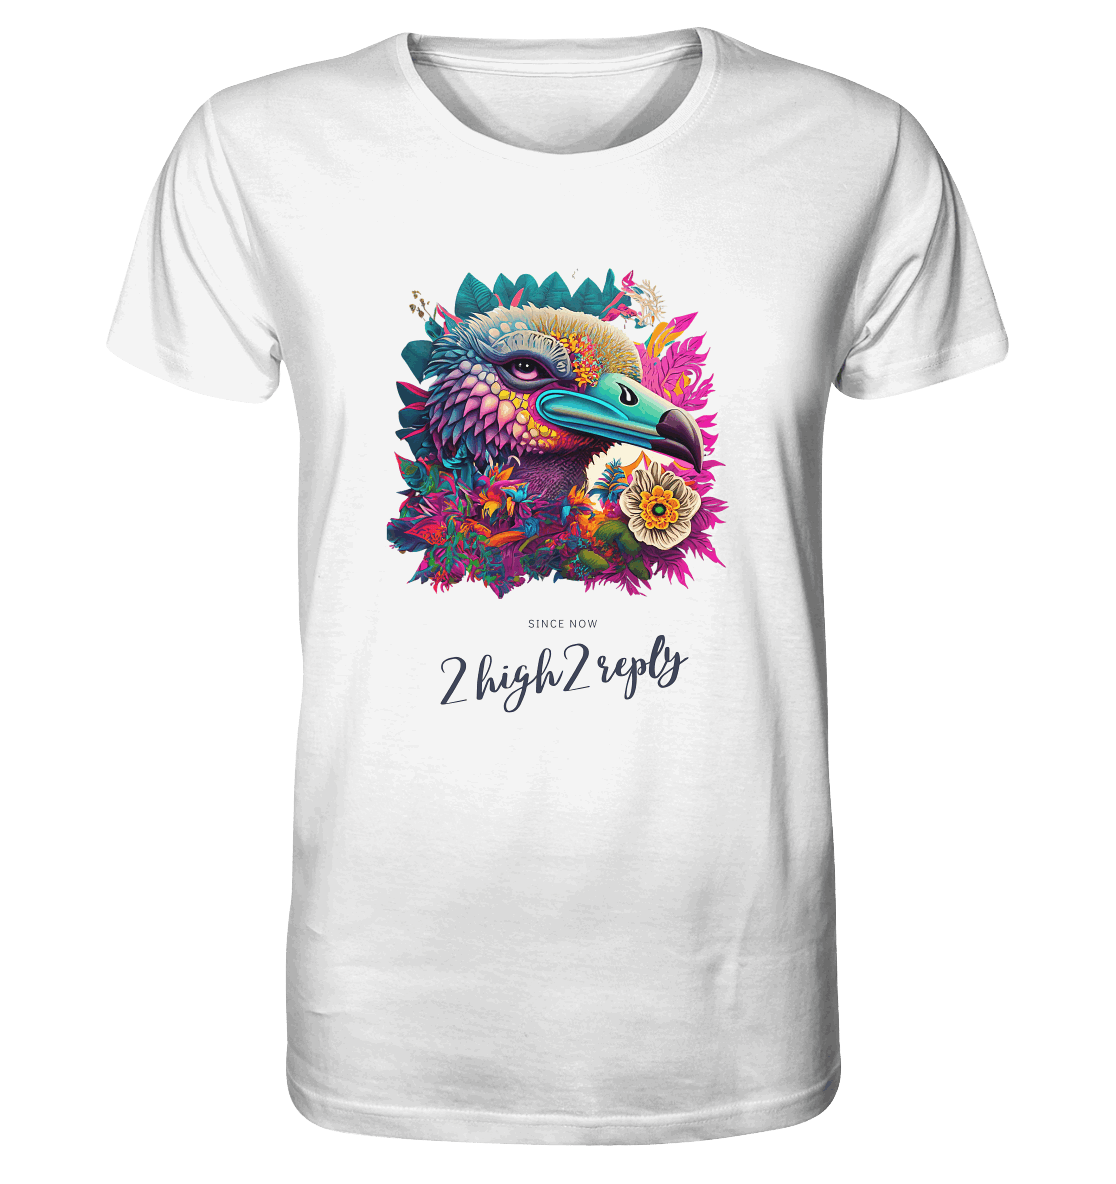 2high2reply / seagull - Organic Shirt